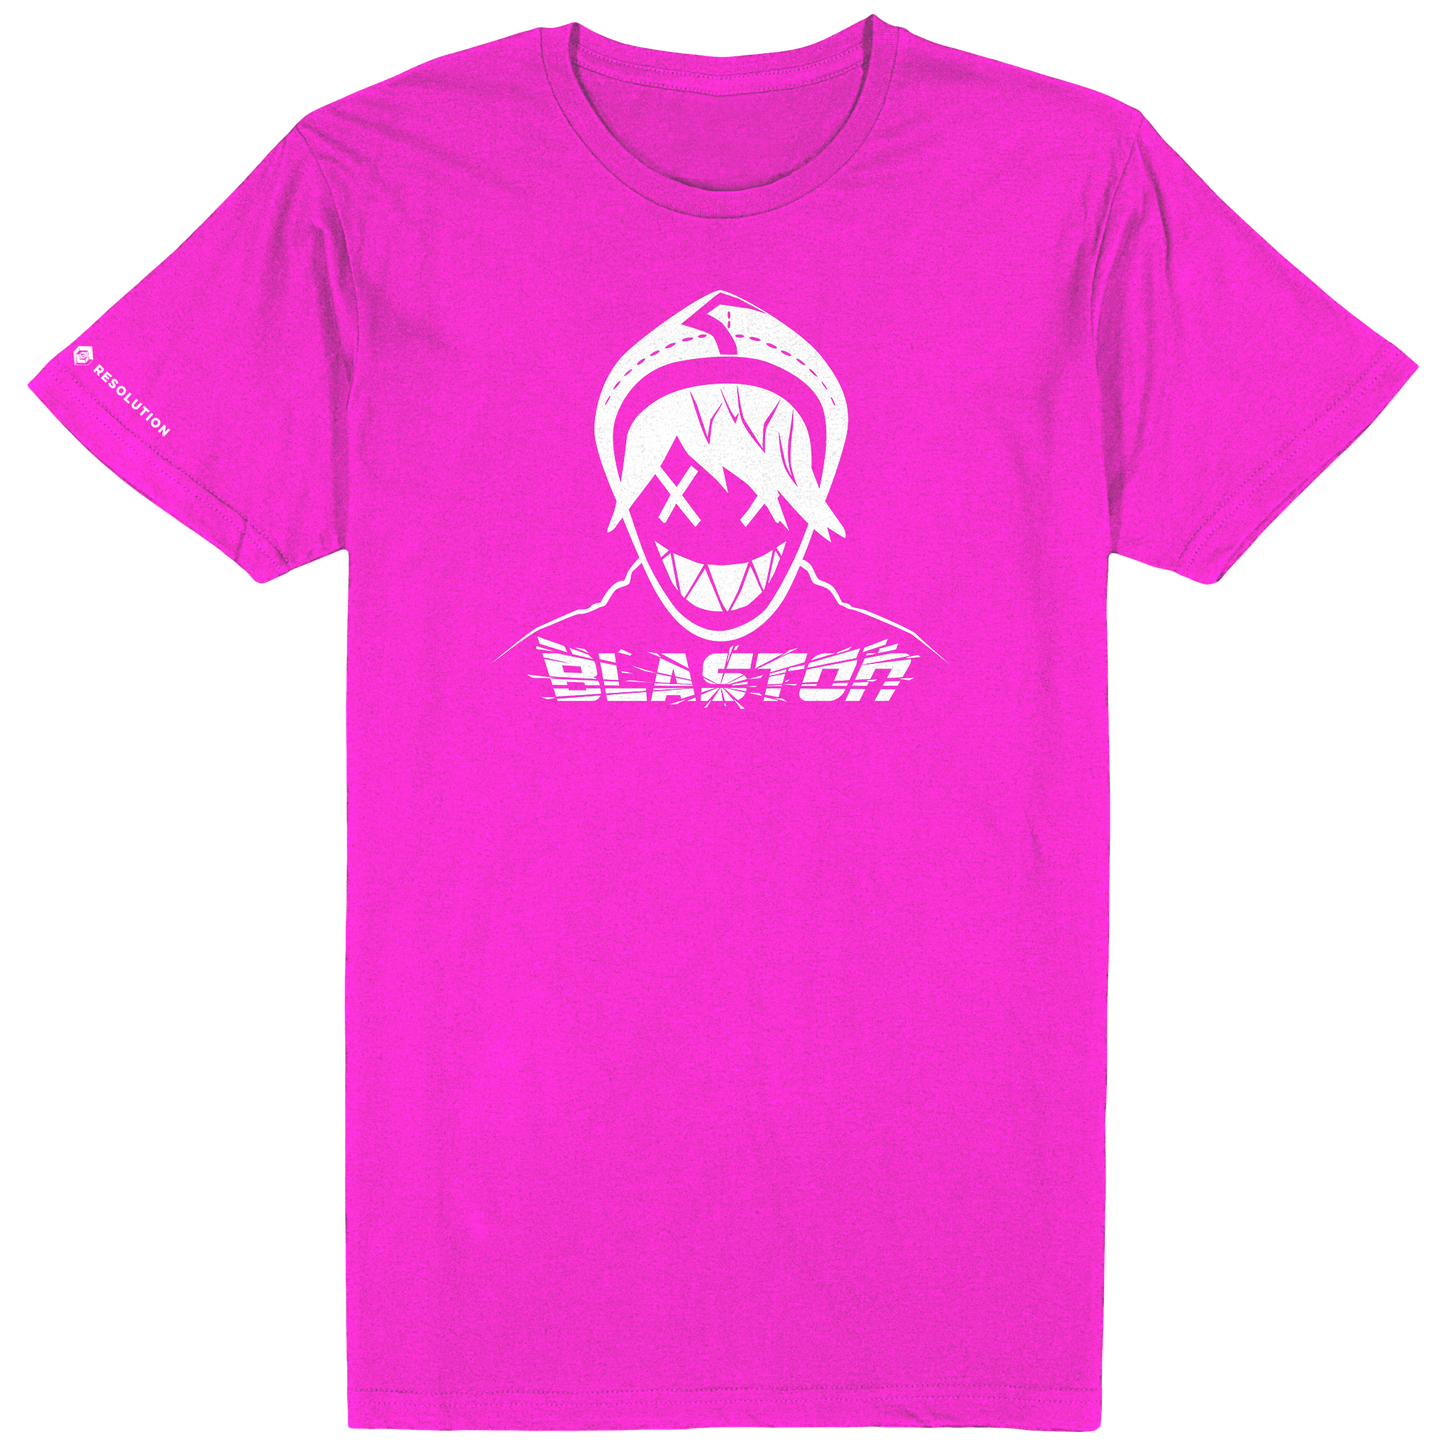 Blaston Hax Tee - White/Pink